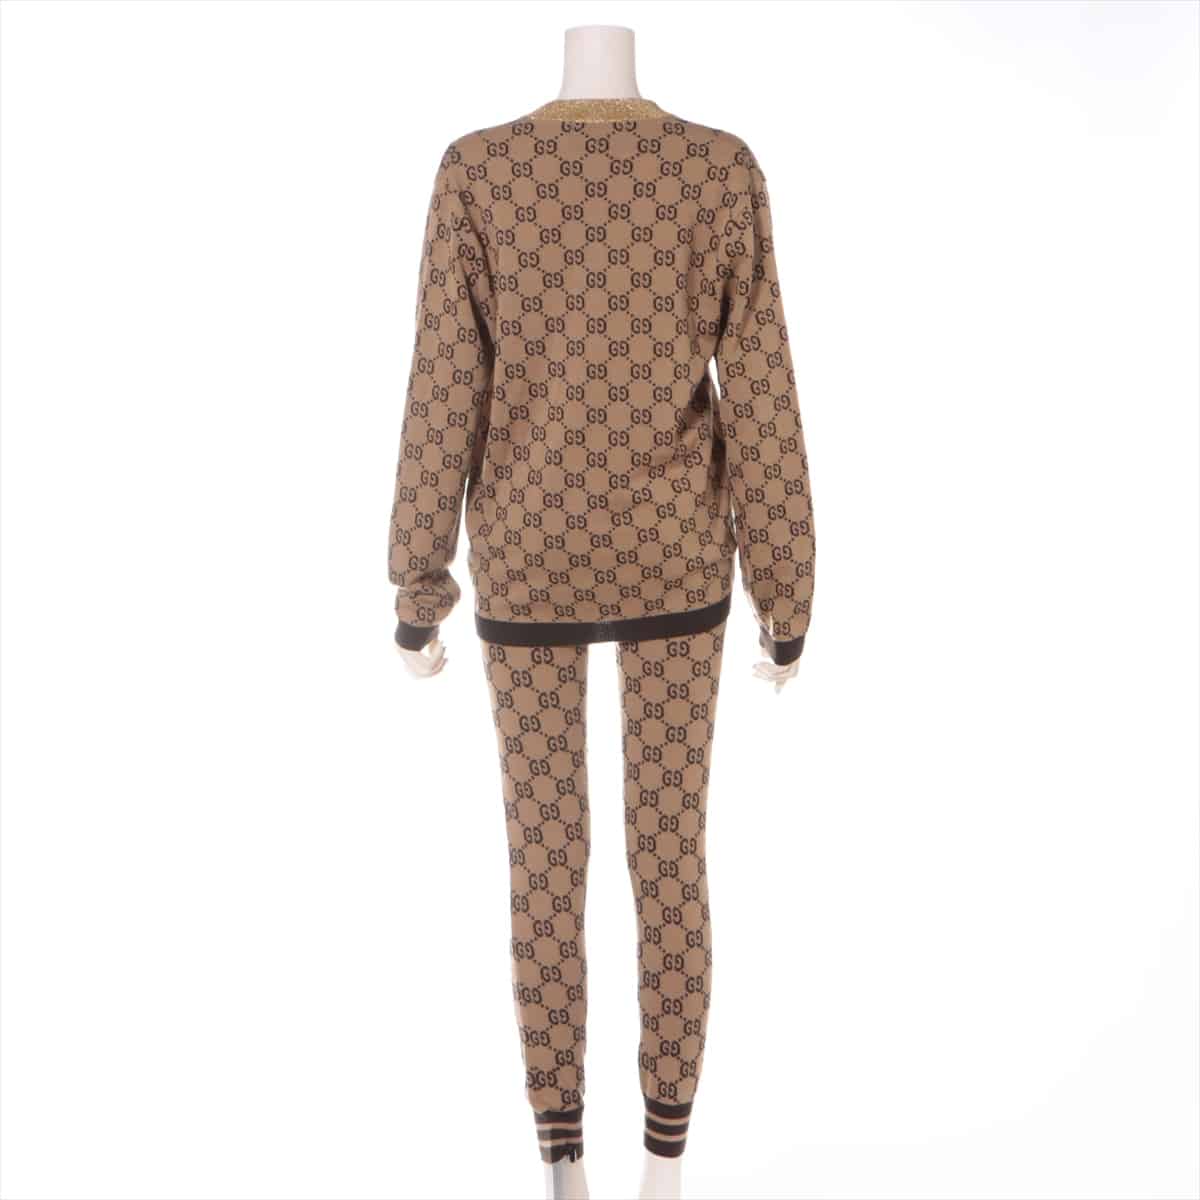 Gucci GG jacquard Wool Setup tops m/bottoms XS Ladies' Beige